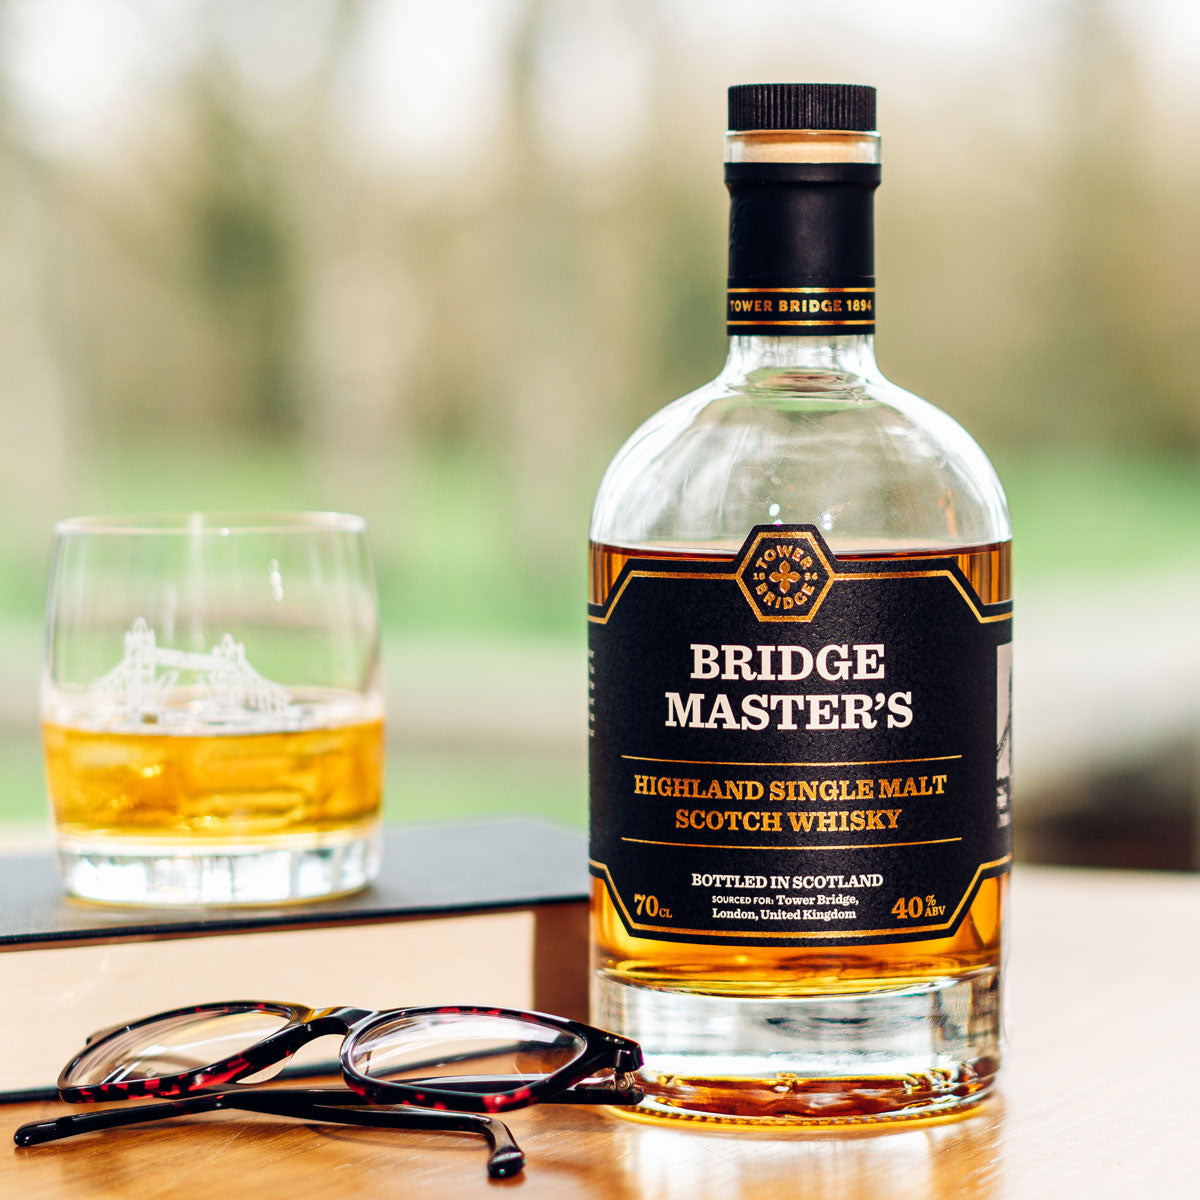 Bridge Master's Whisky outdoors